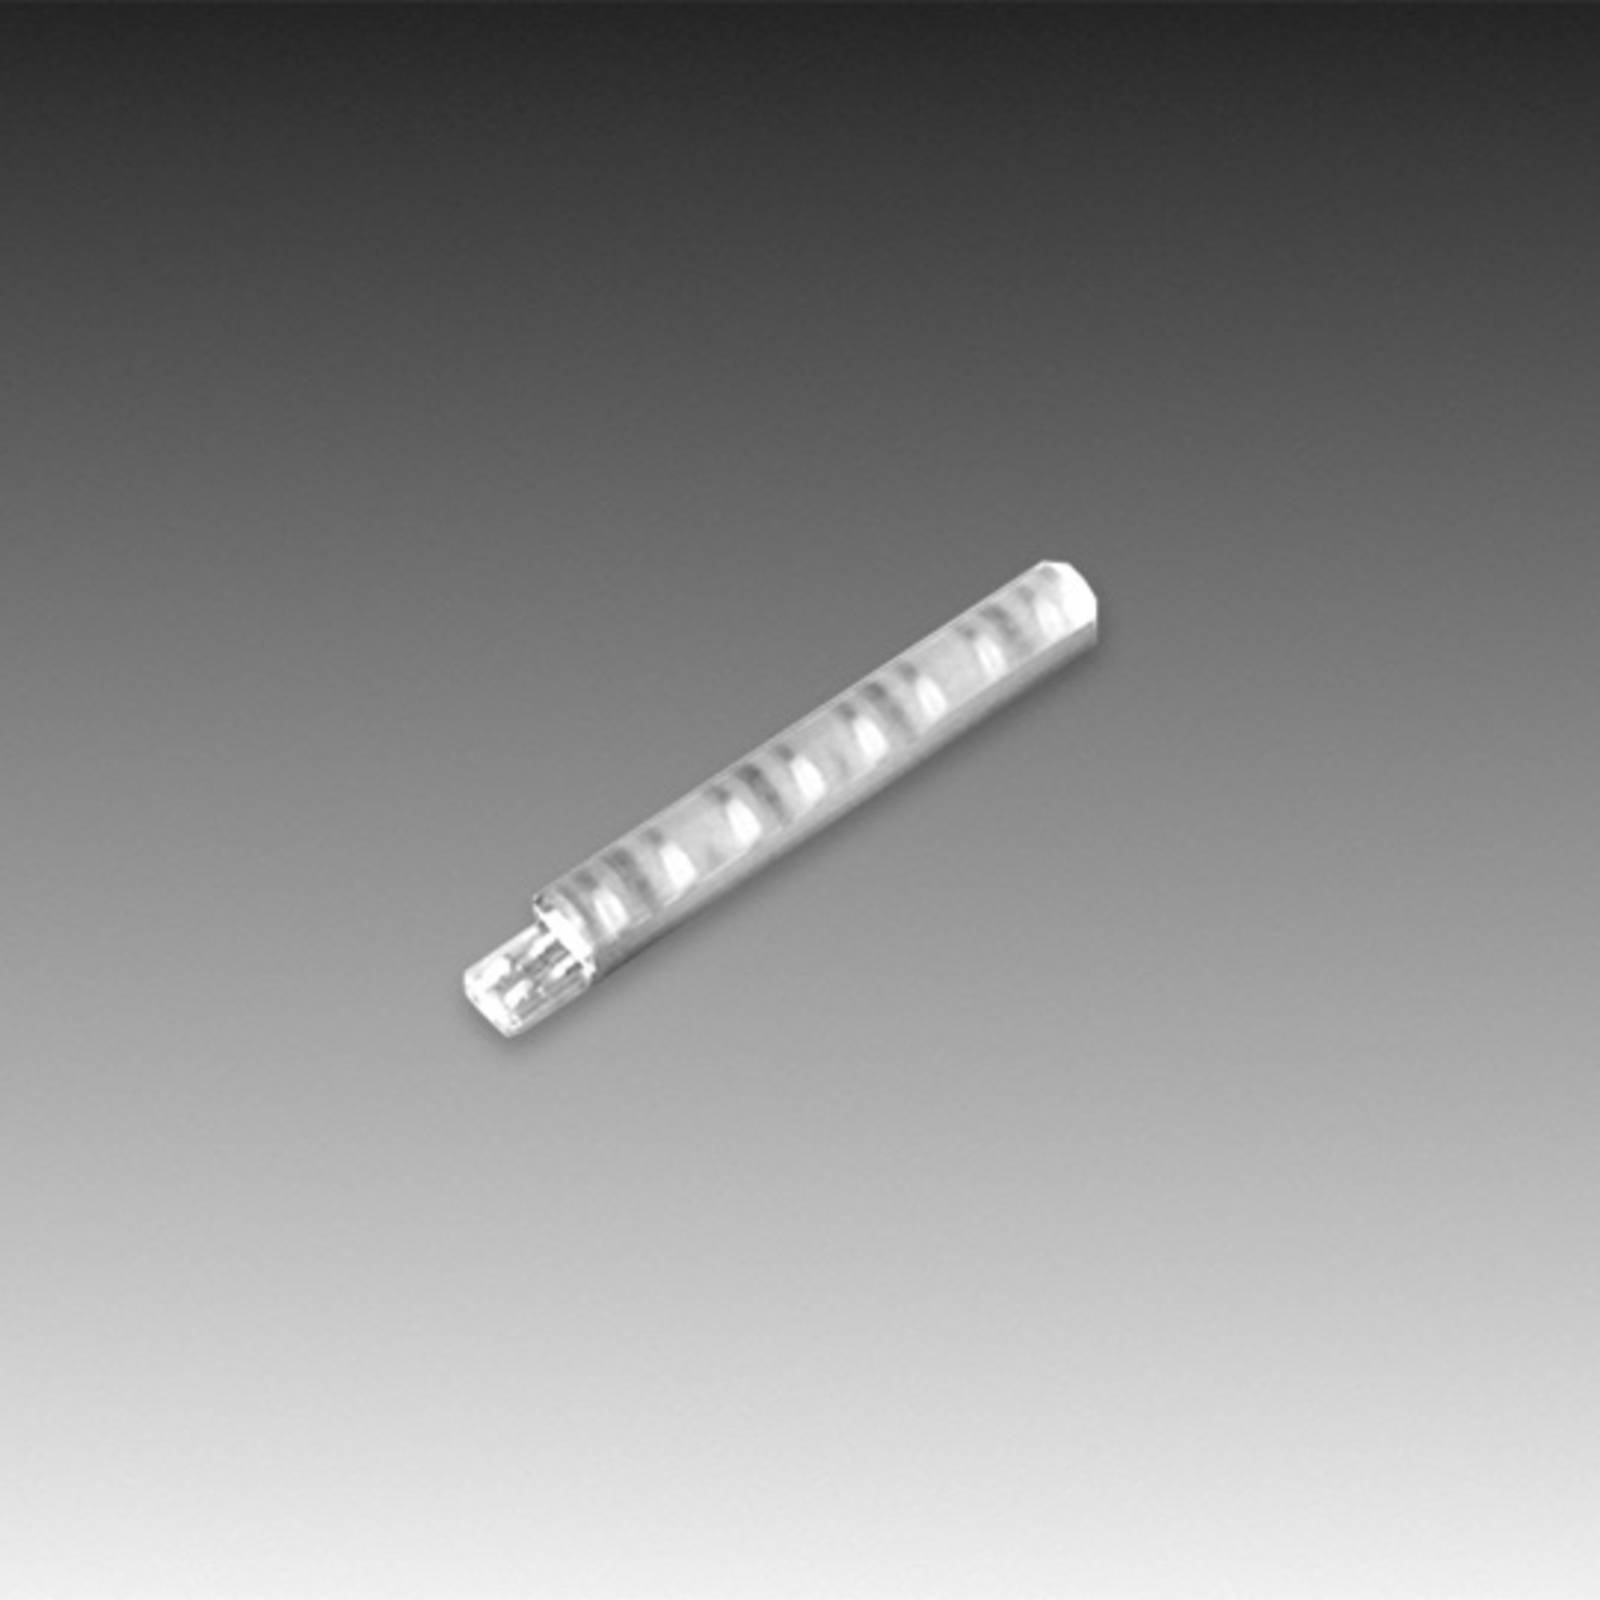 Hera LED-Stab LED Stick 2 für Möbel, 7cm, tageslicht